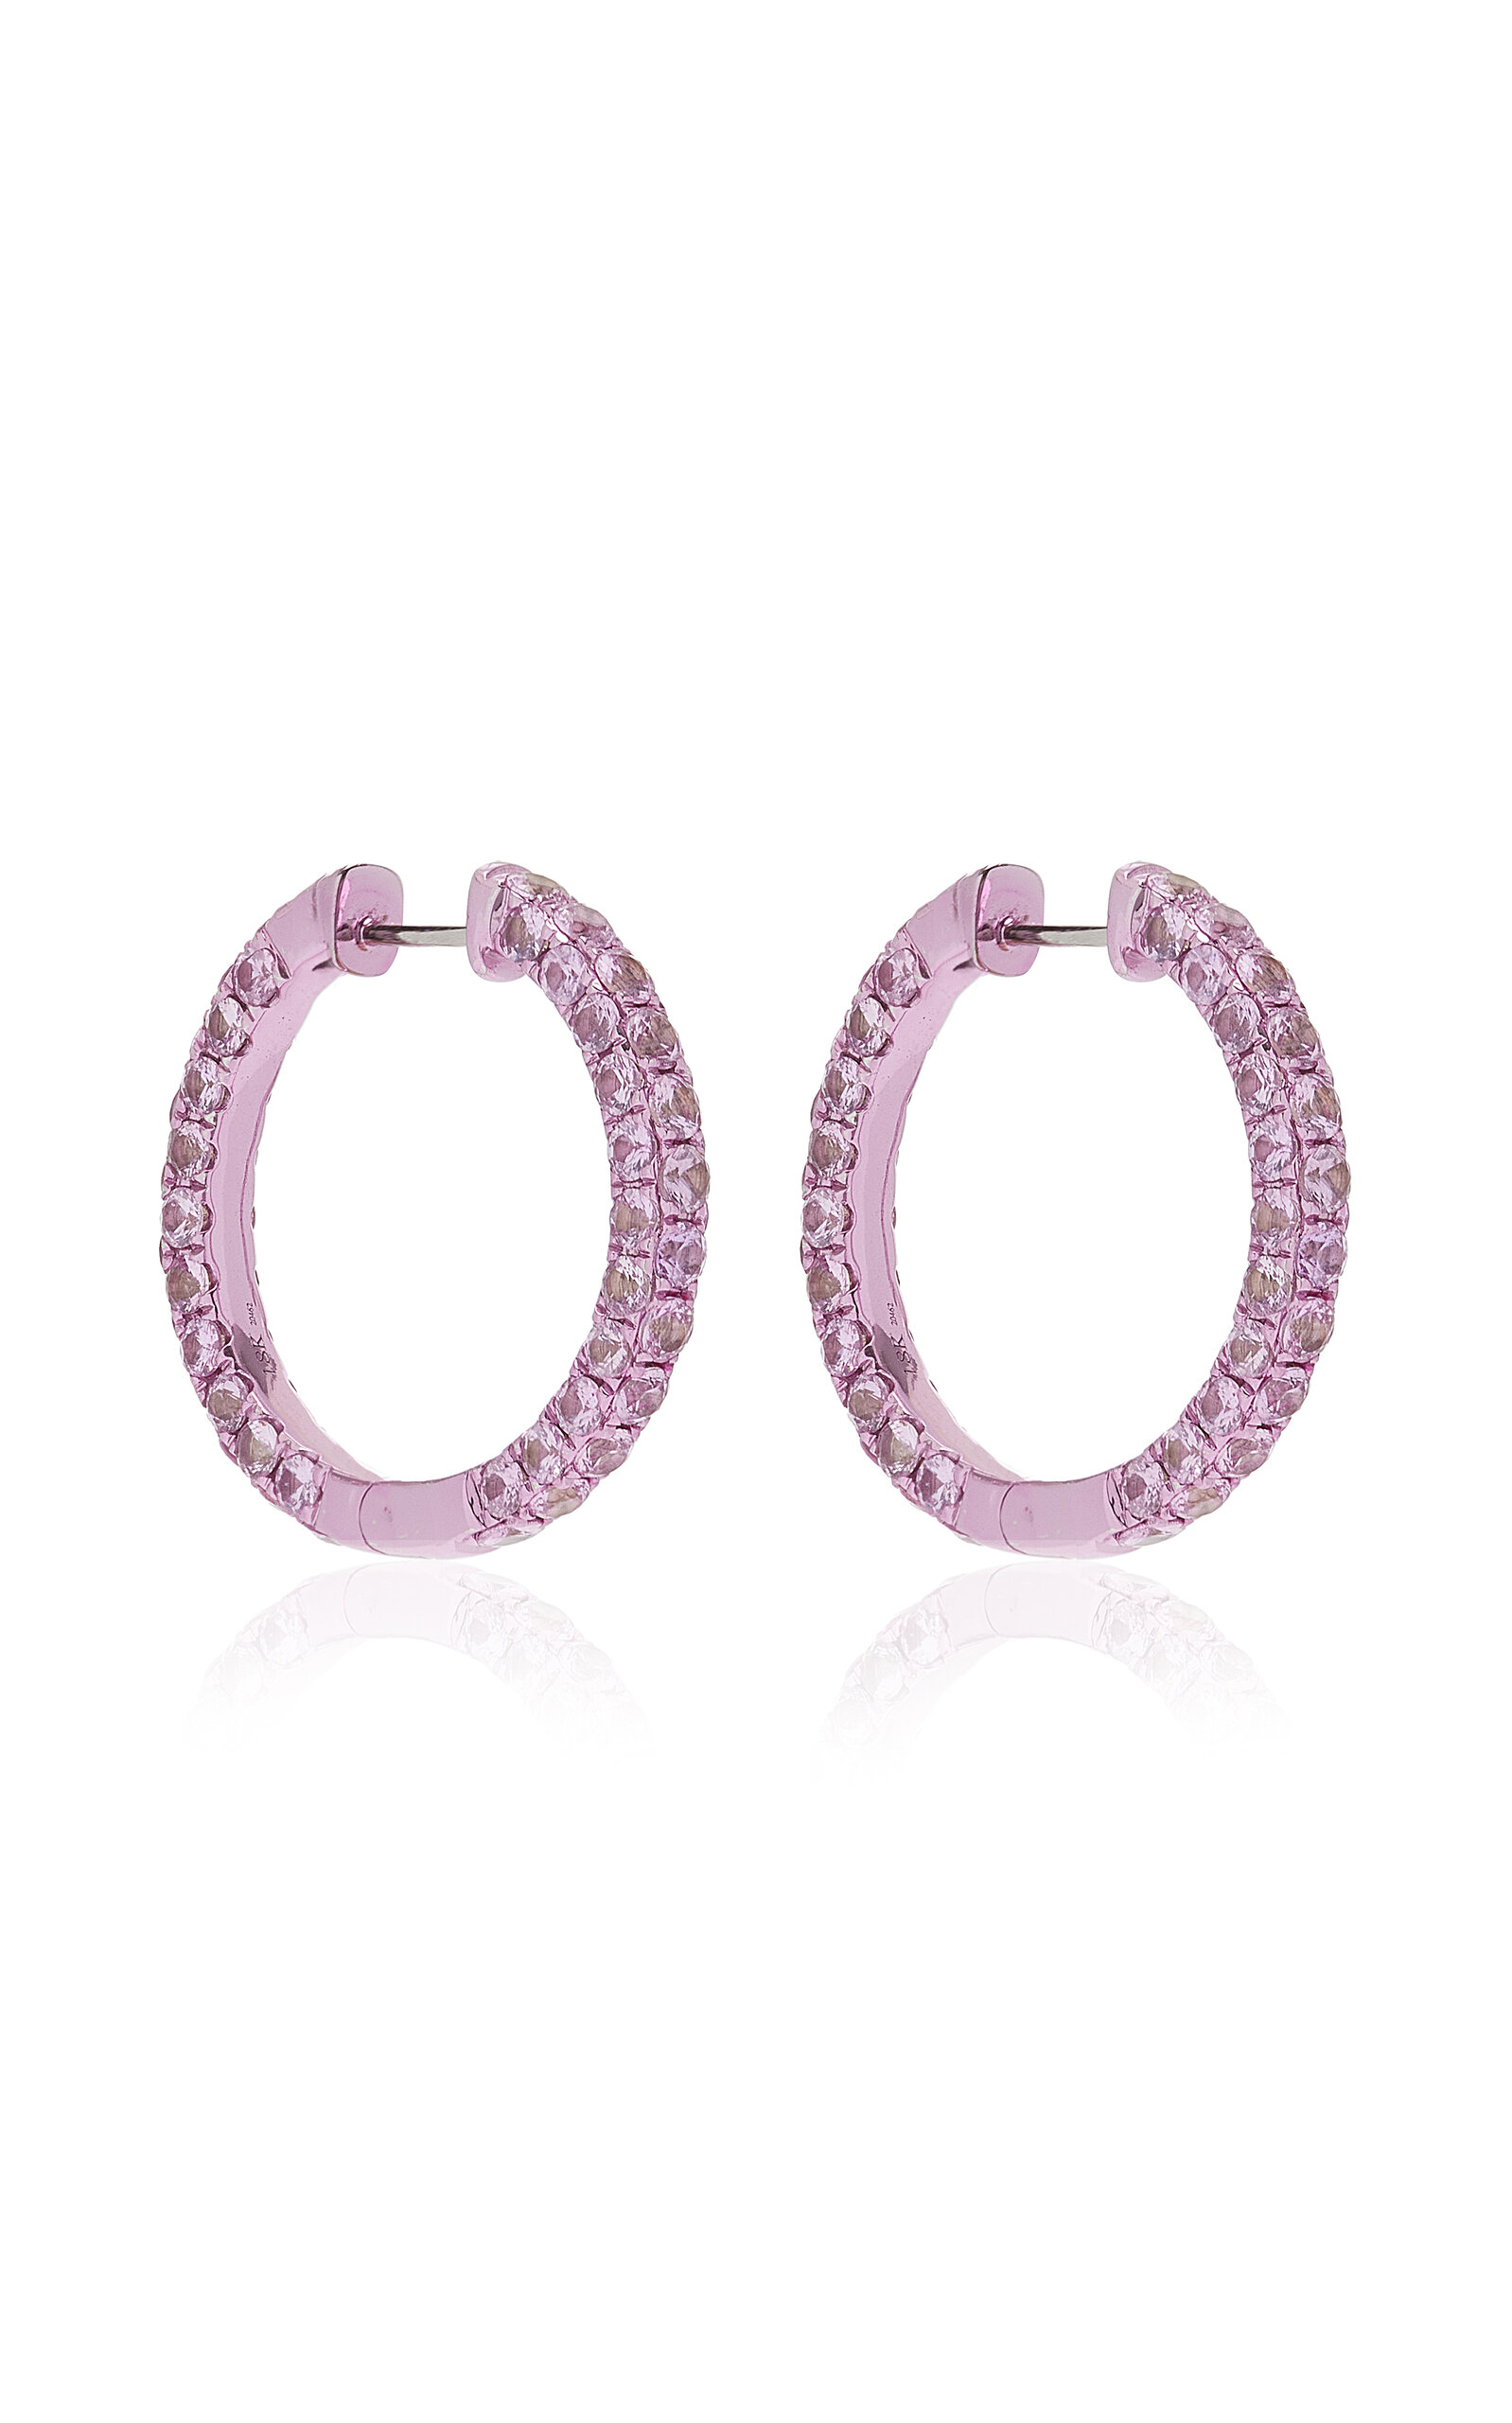 Graziela Large 3 Sided Pink-rhodium Sapphire Hoop Earrings